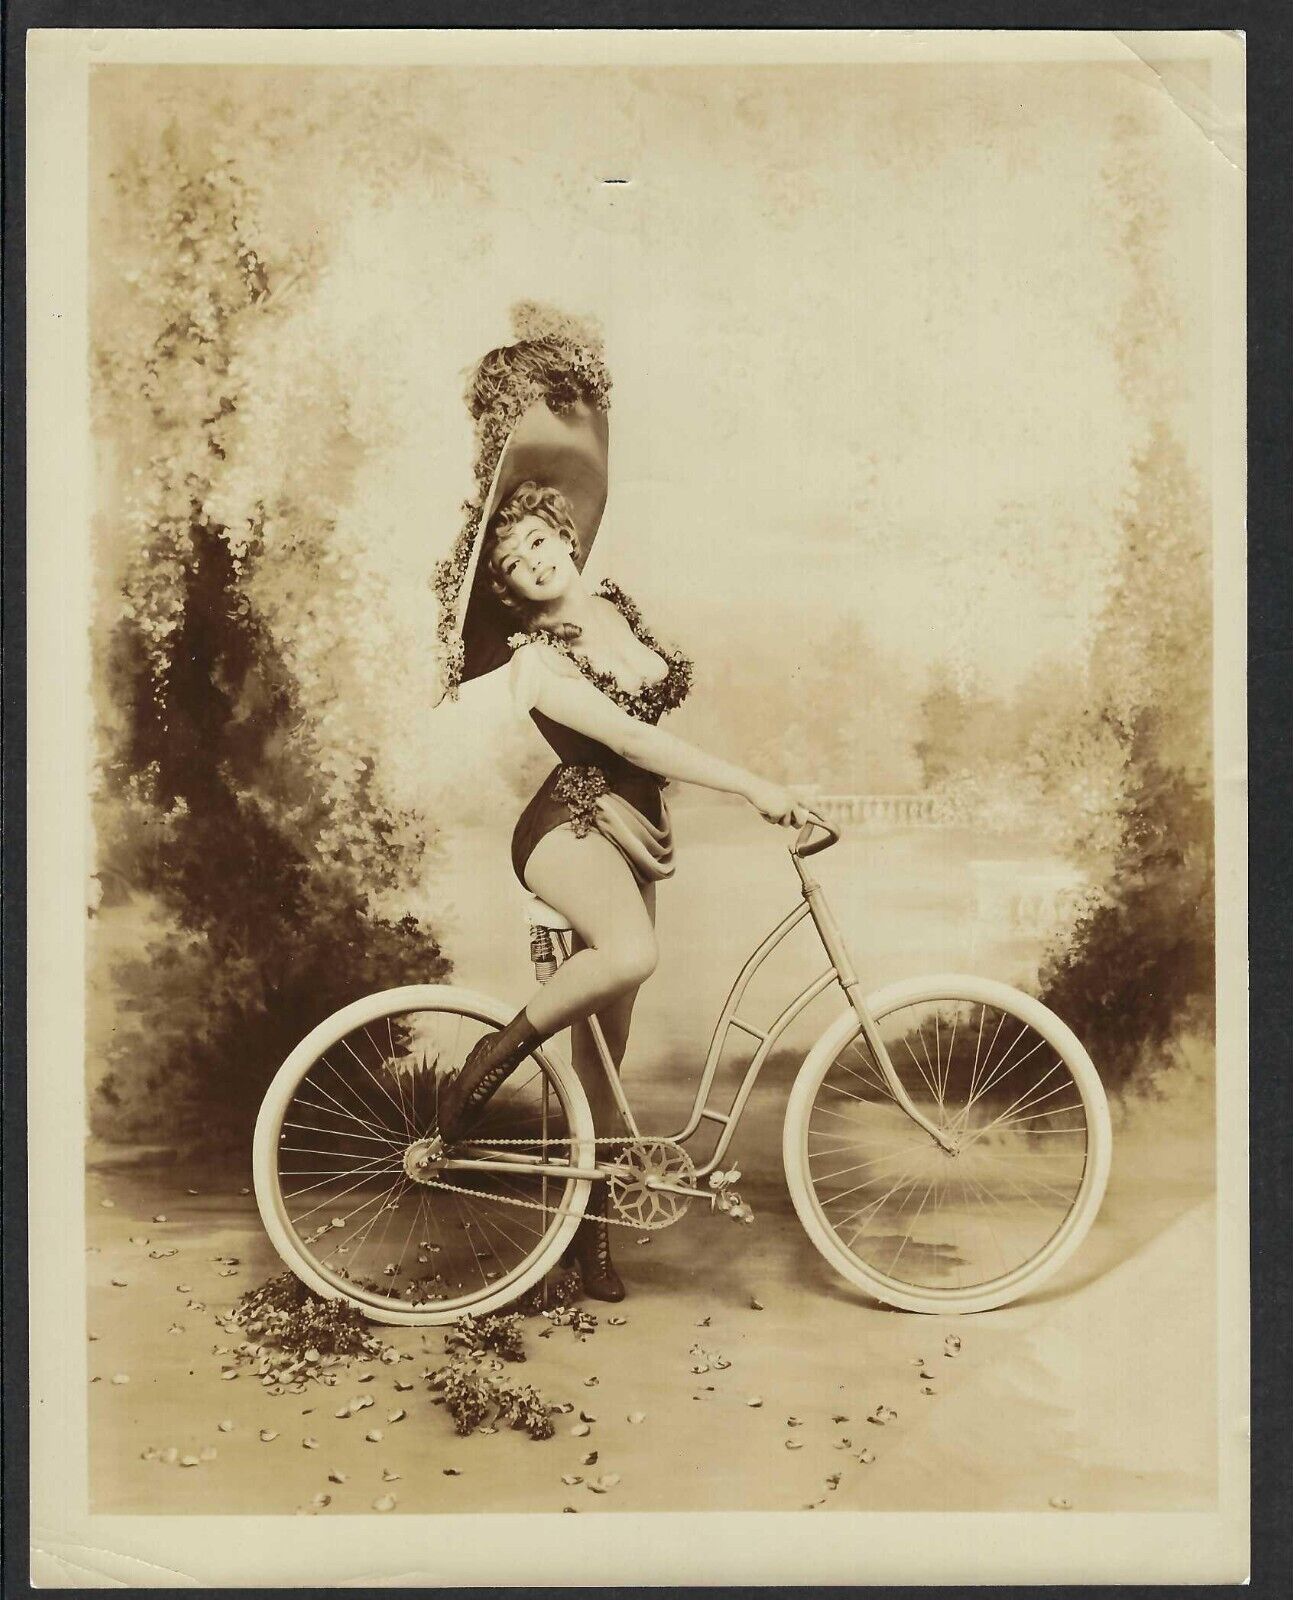 HOLLYWOOD MARILYN MONROE ACTRESS ON A BIKE VINTAGE ORIGINAL PHOTO